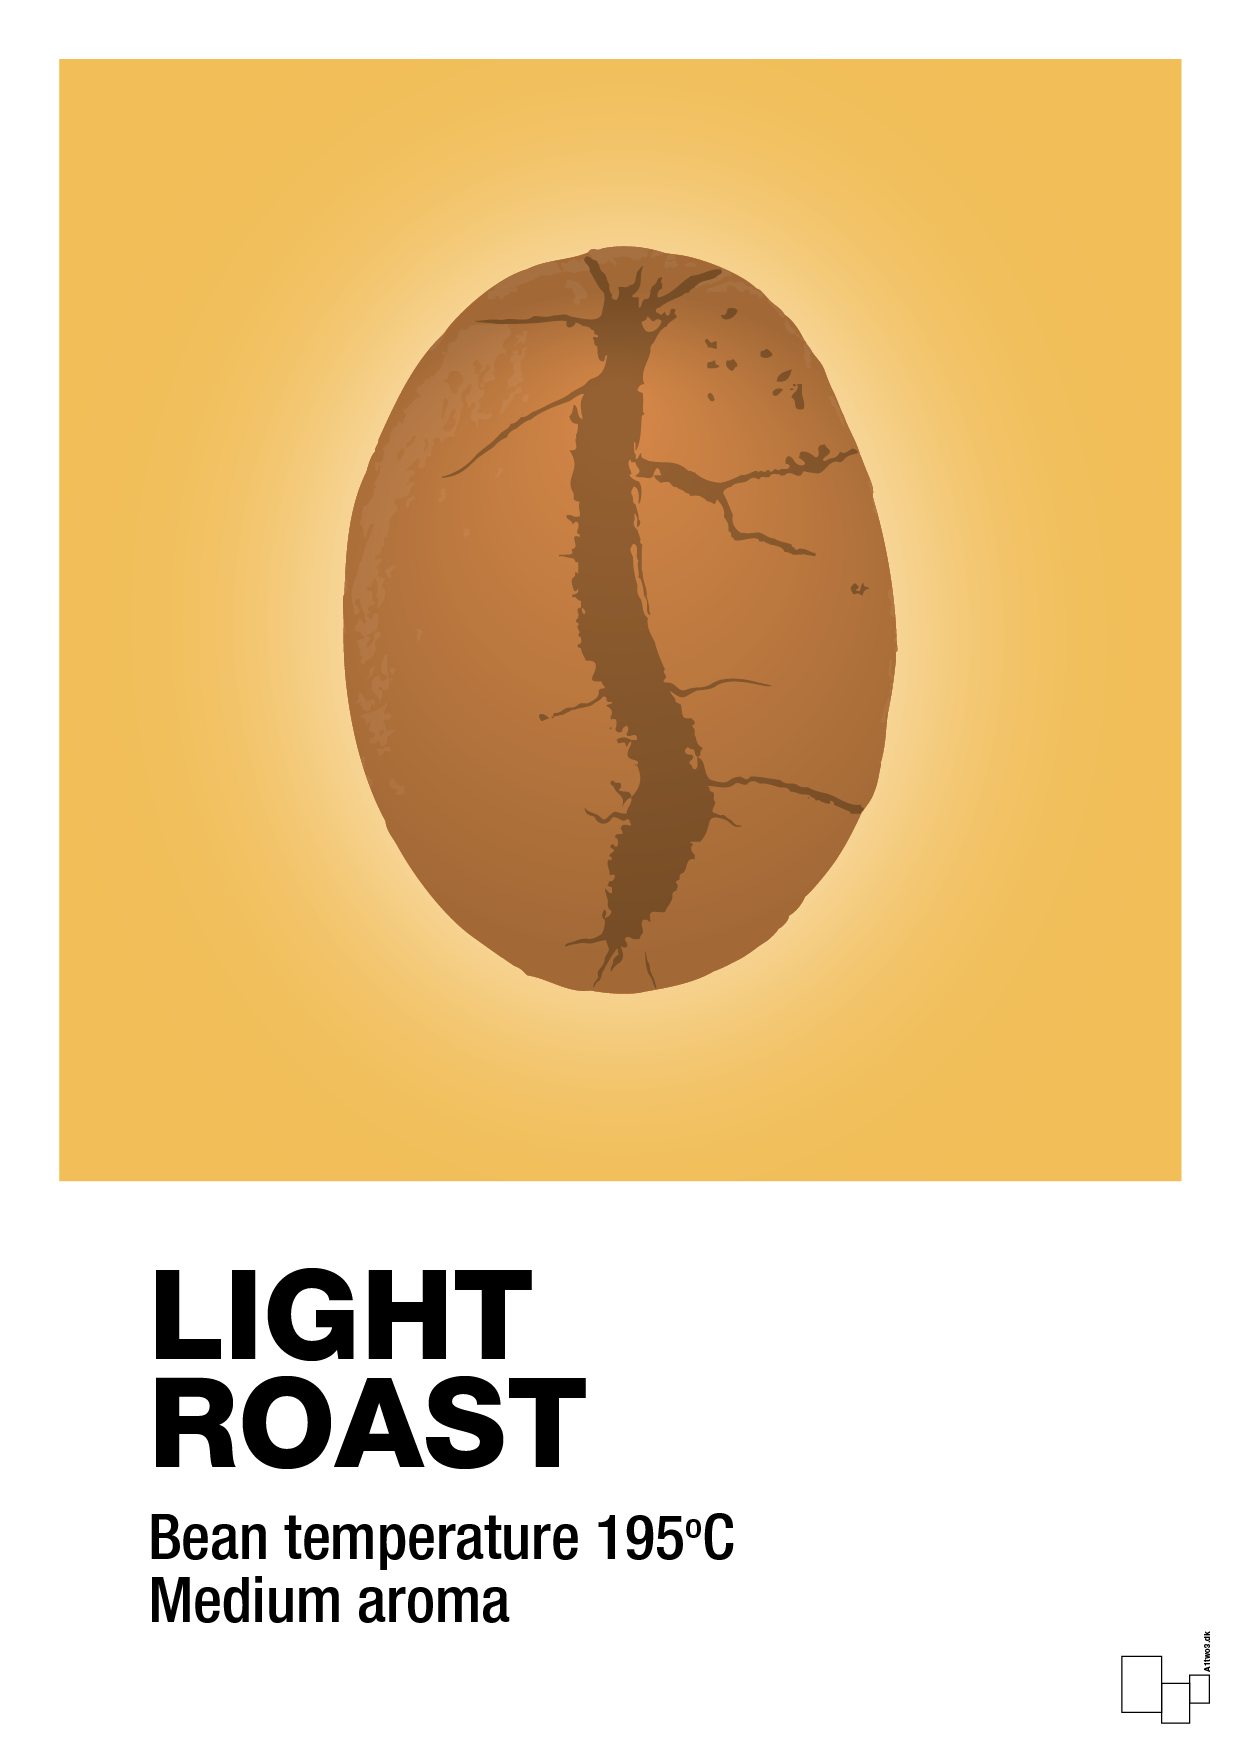 light roast - Plakat med Mad & Drikke i Honeycomb